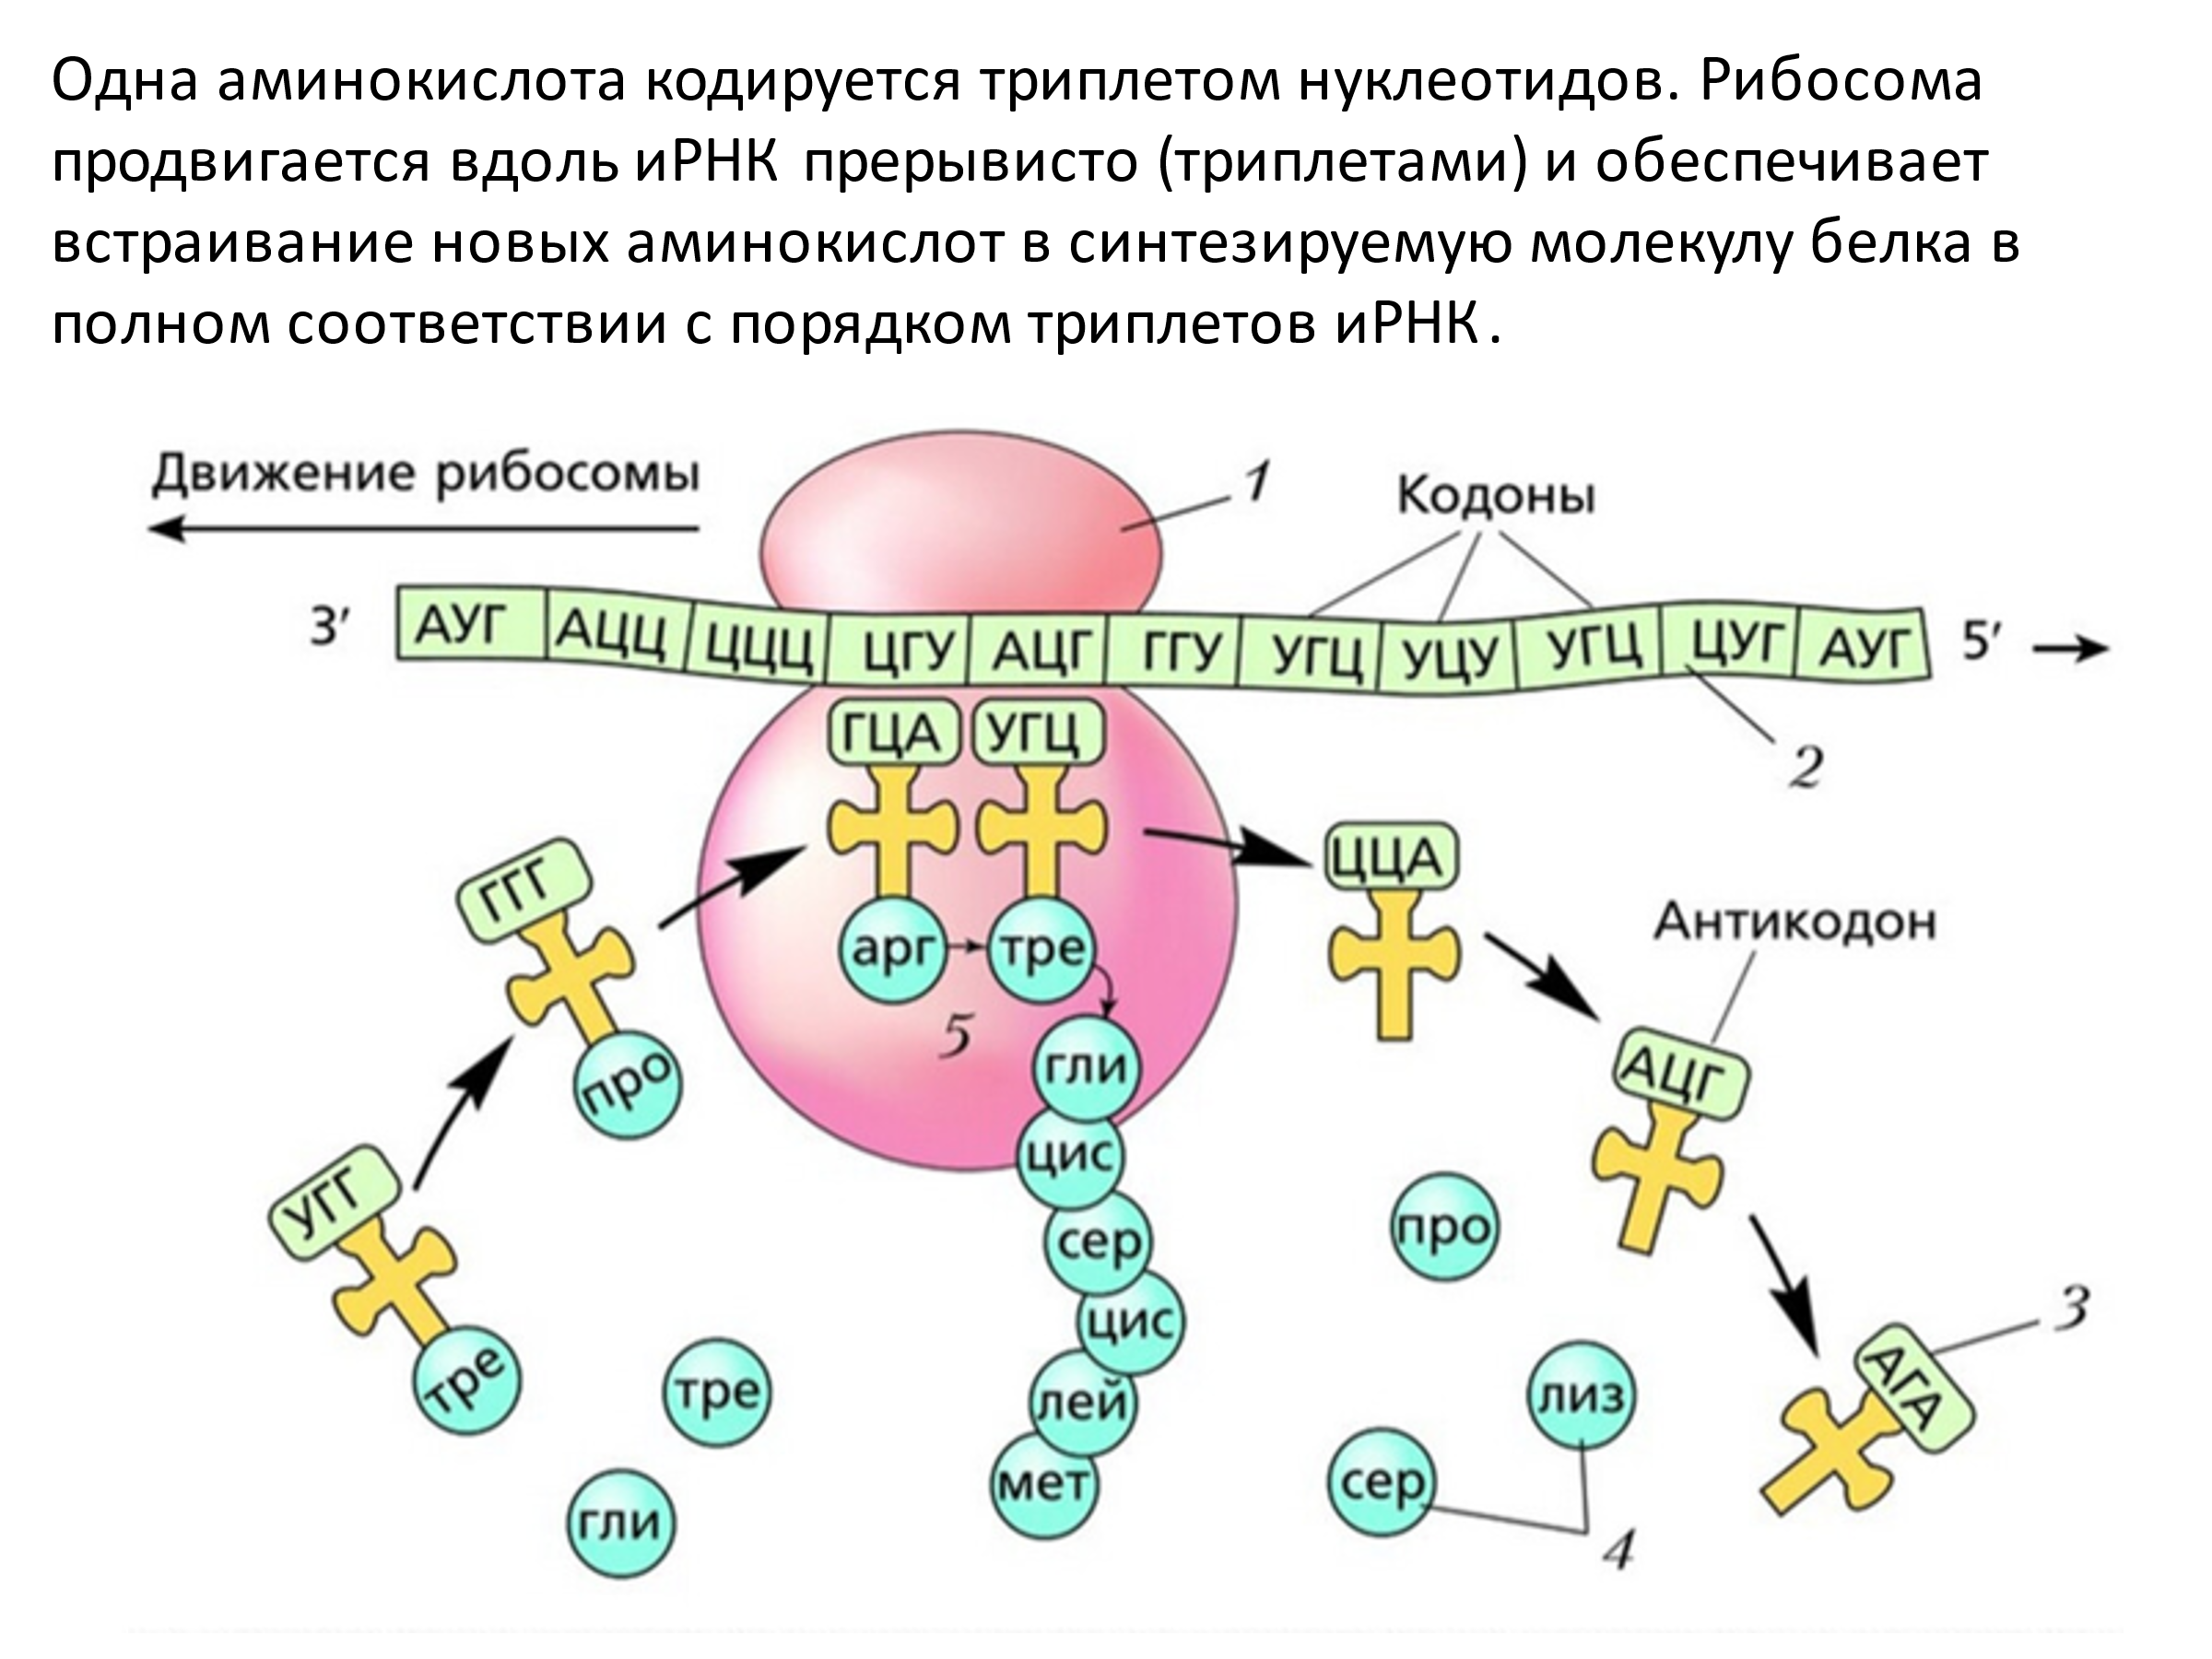 Сборка полипептидов. Трансляция Биосинтез схема. Процесс синтеза белка на рибосоме схема. Этапы трансляции биосинтеза белка схема. Схема синтеза белка в рибосоме трансляция.